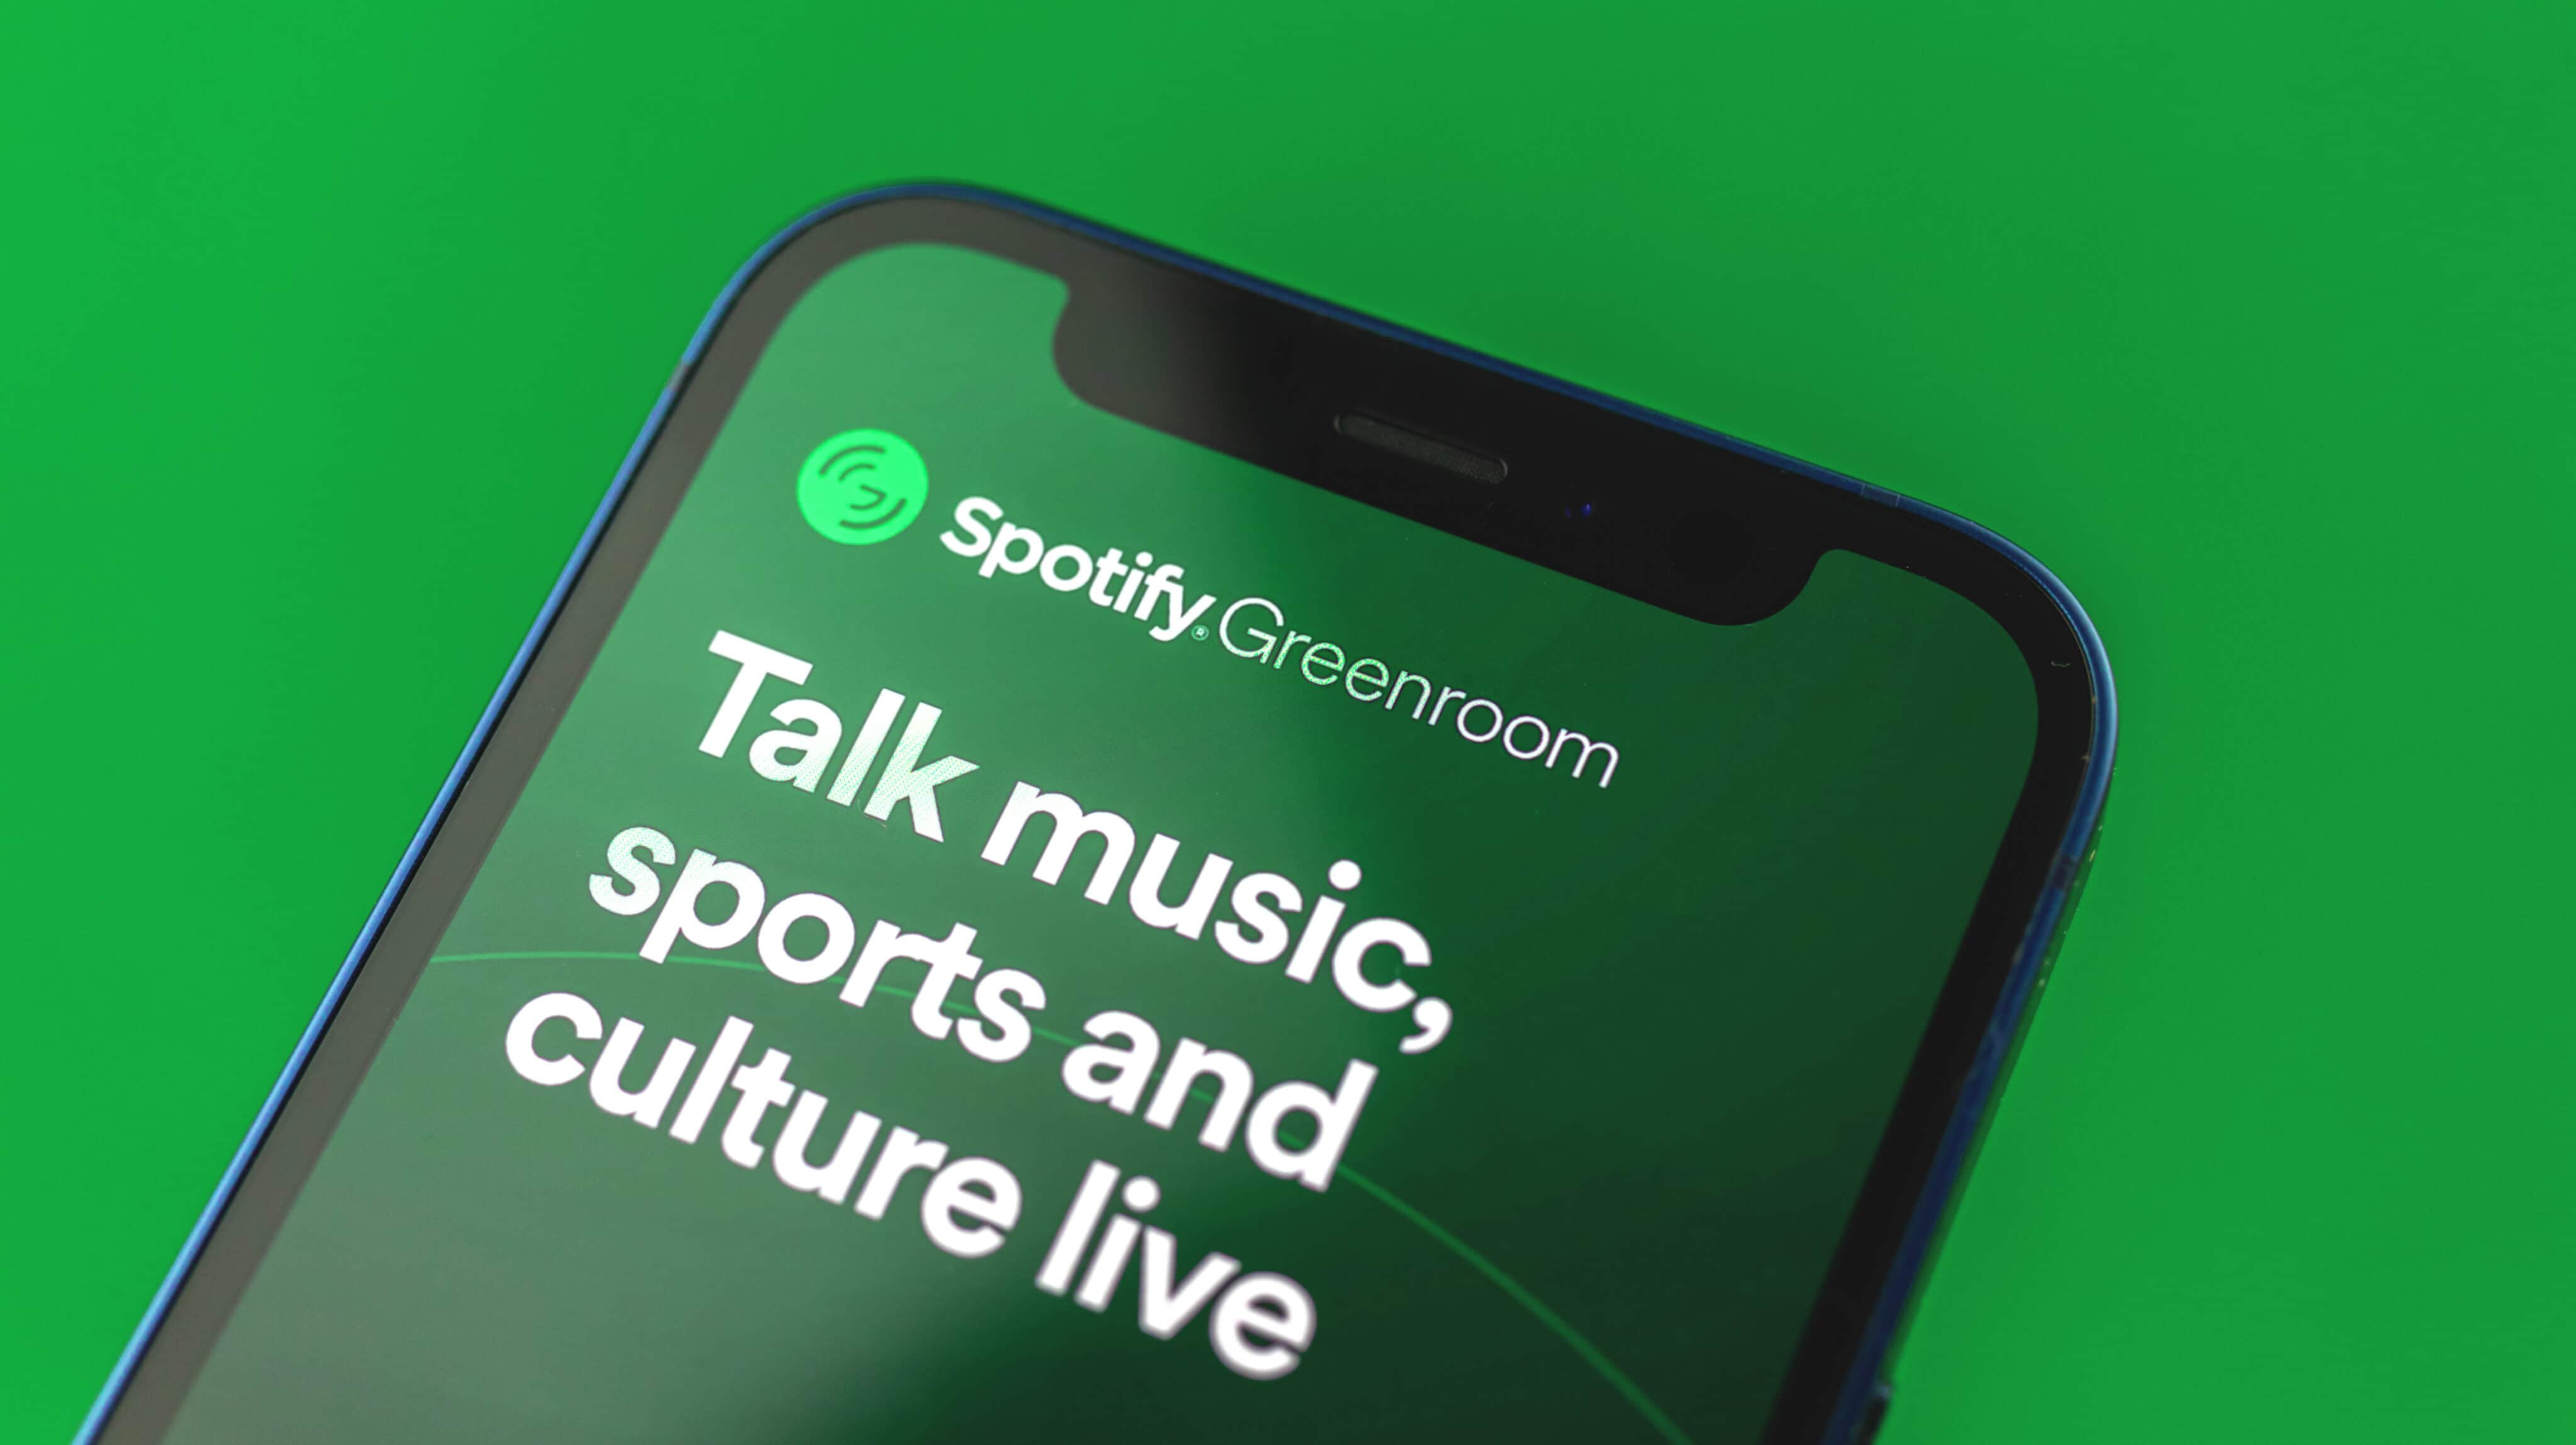 Spotify Greenroom